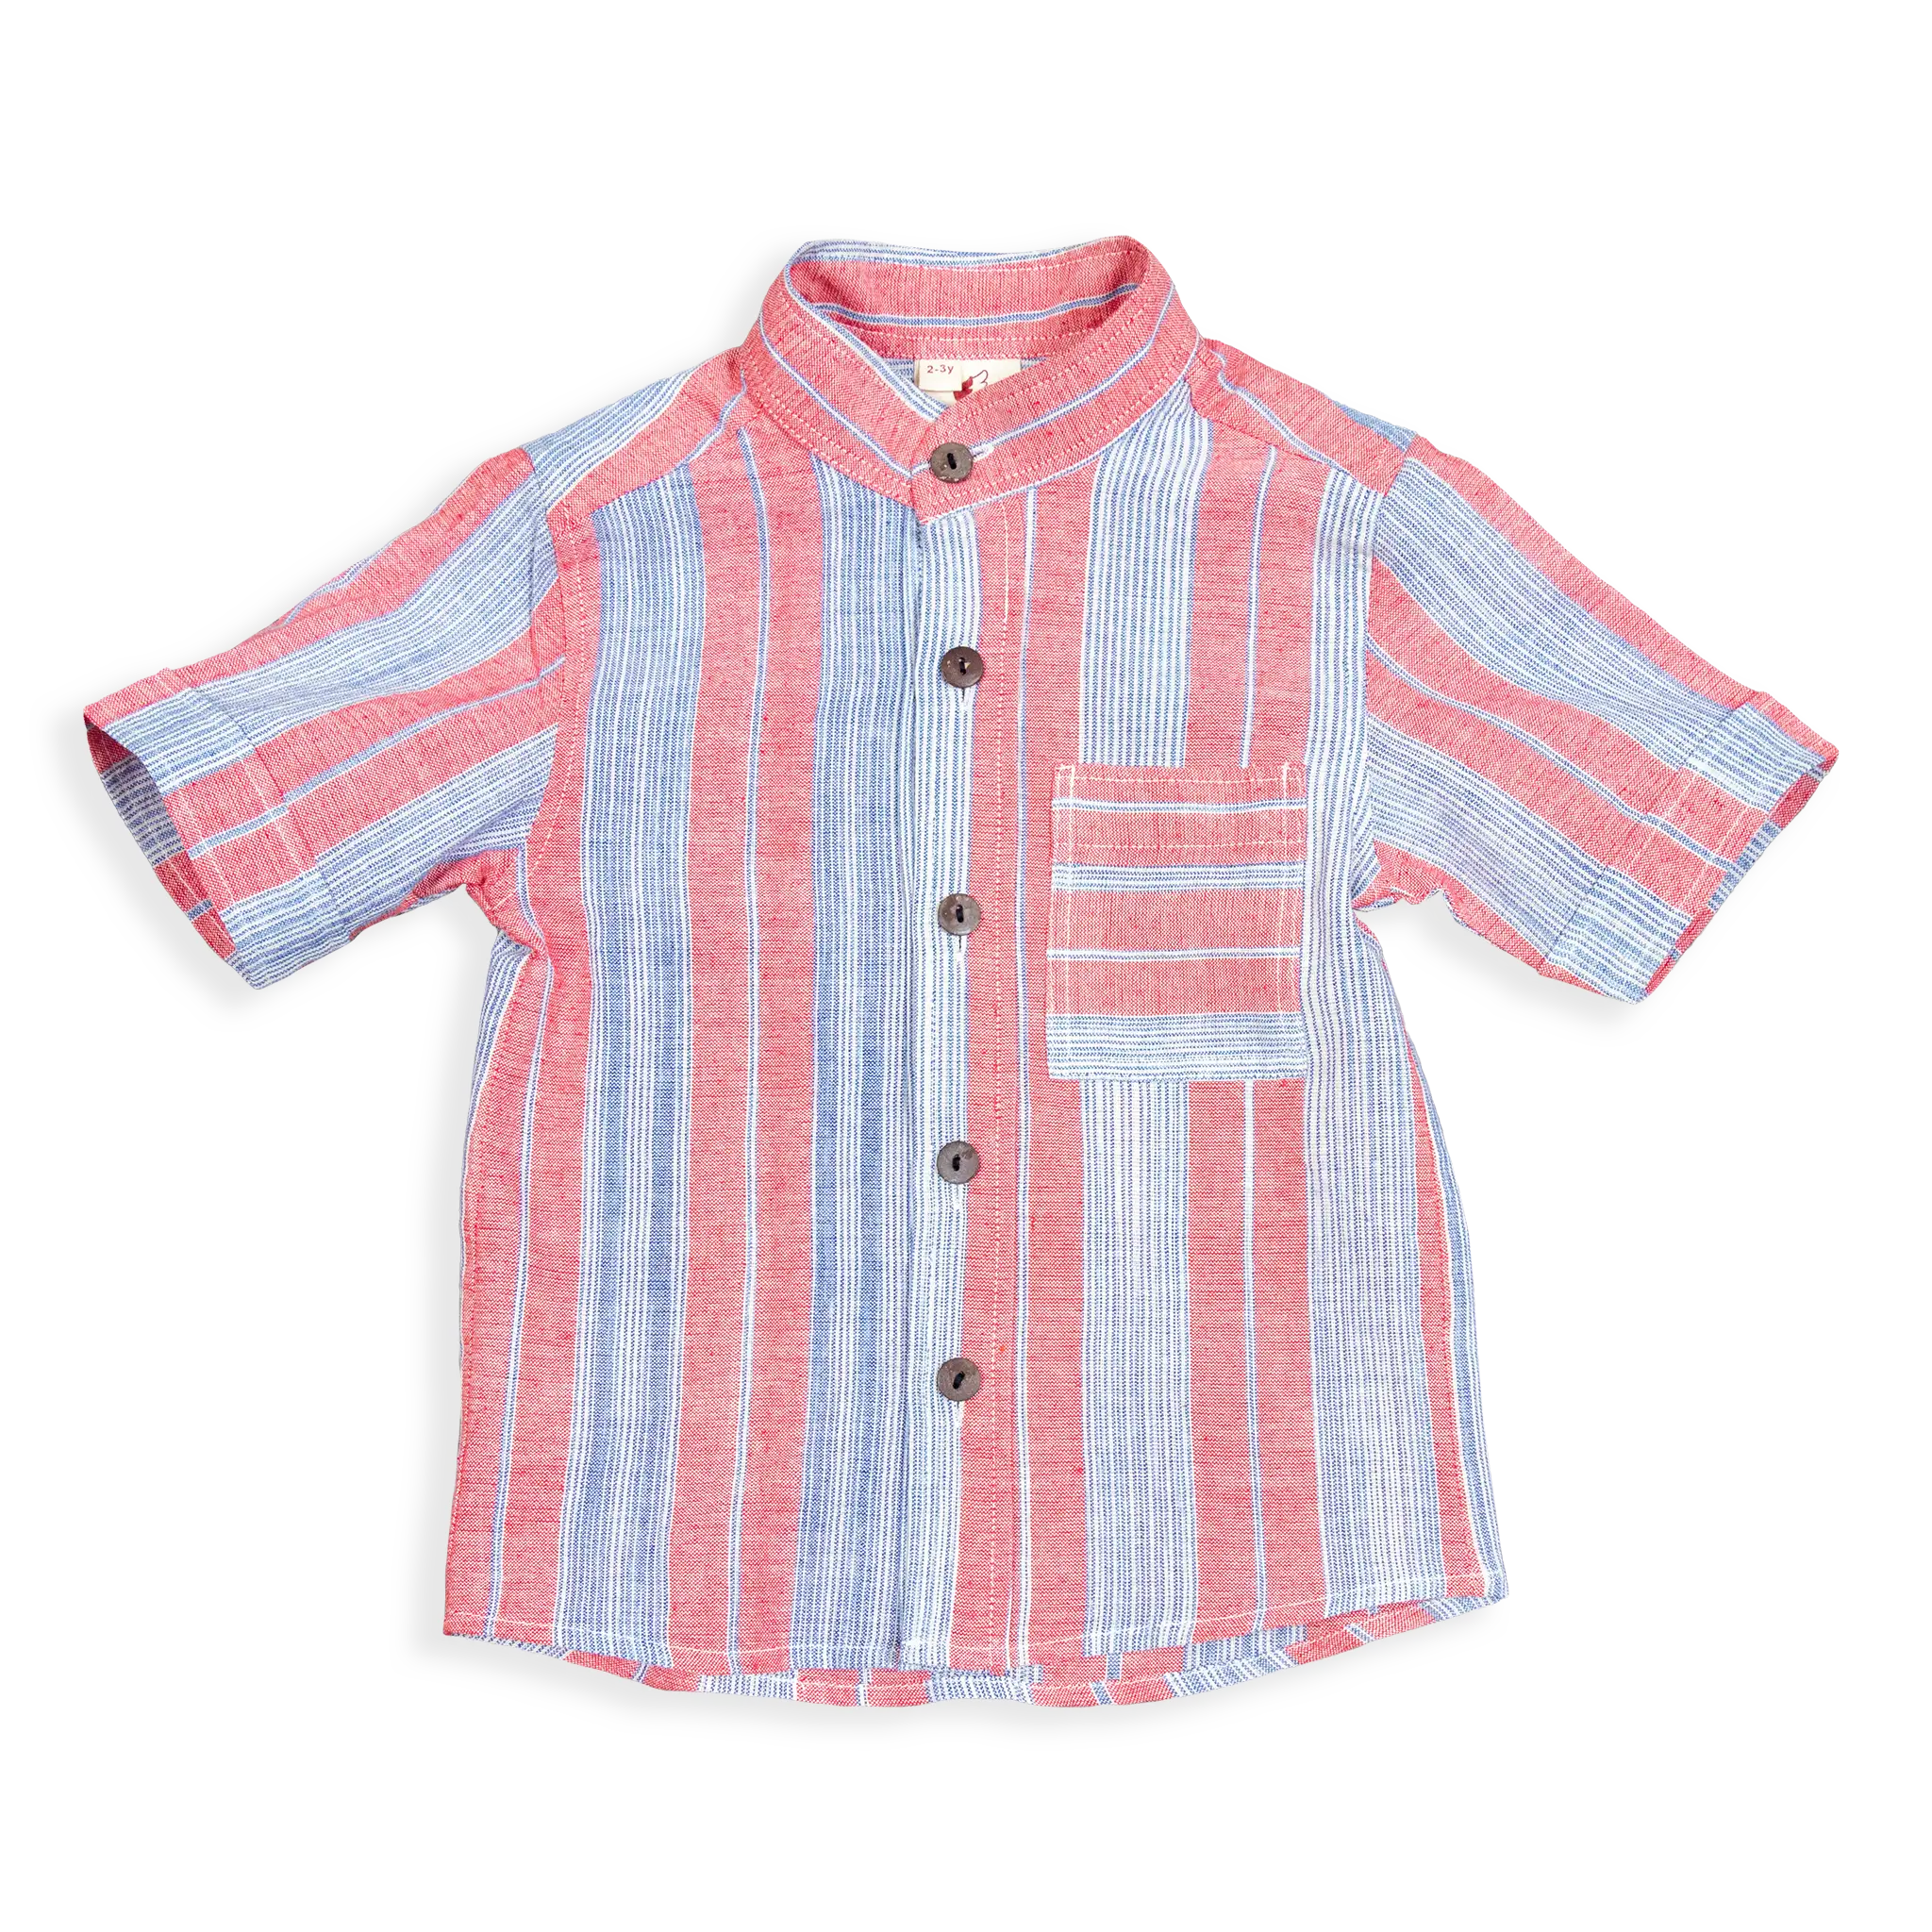 Kokroma EasyLine Half Sleeves Shirt For Boy (2-8y)